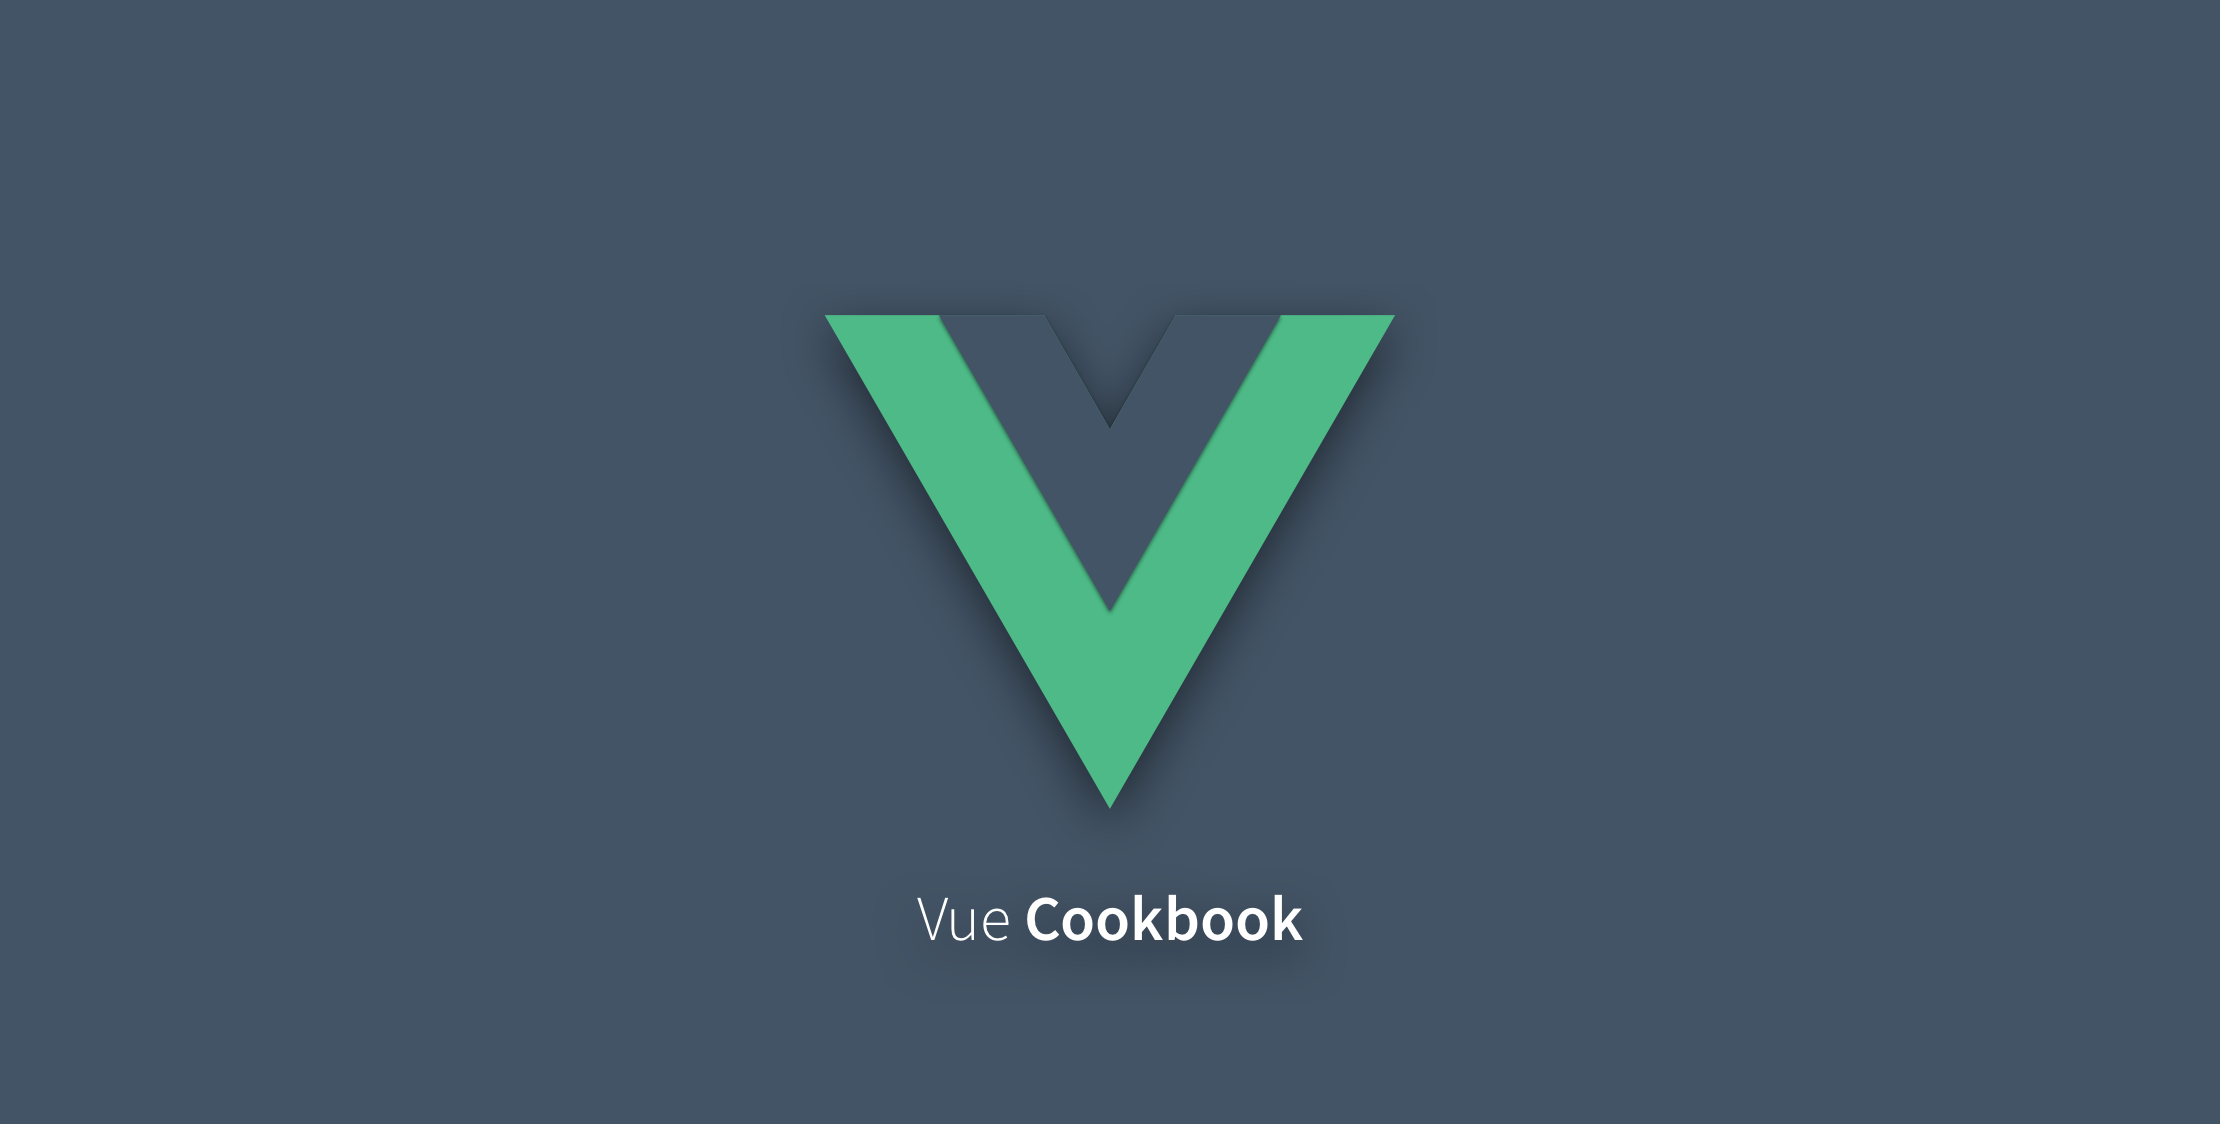 The Vue Cookbook image